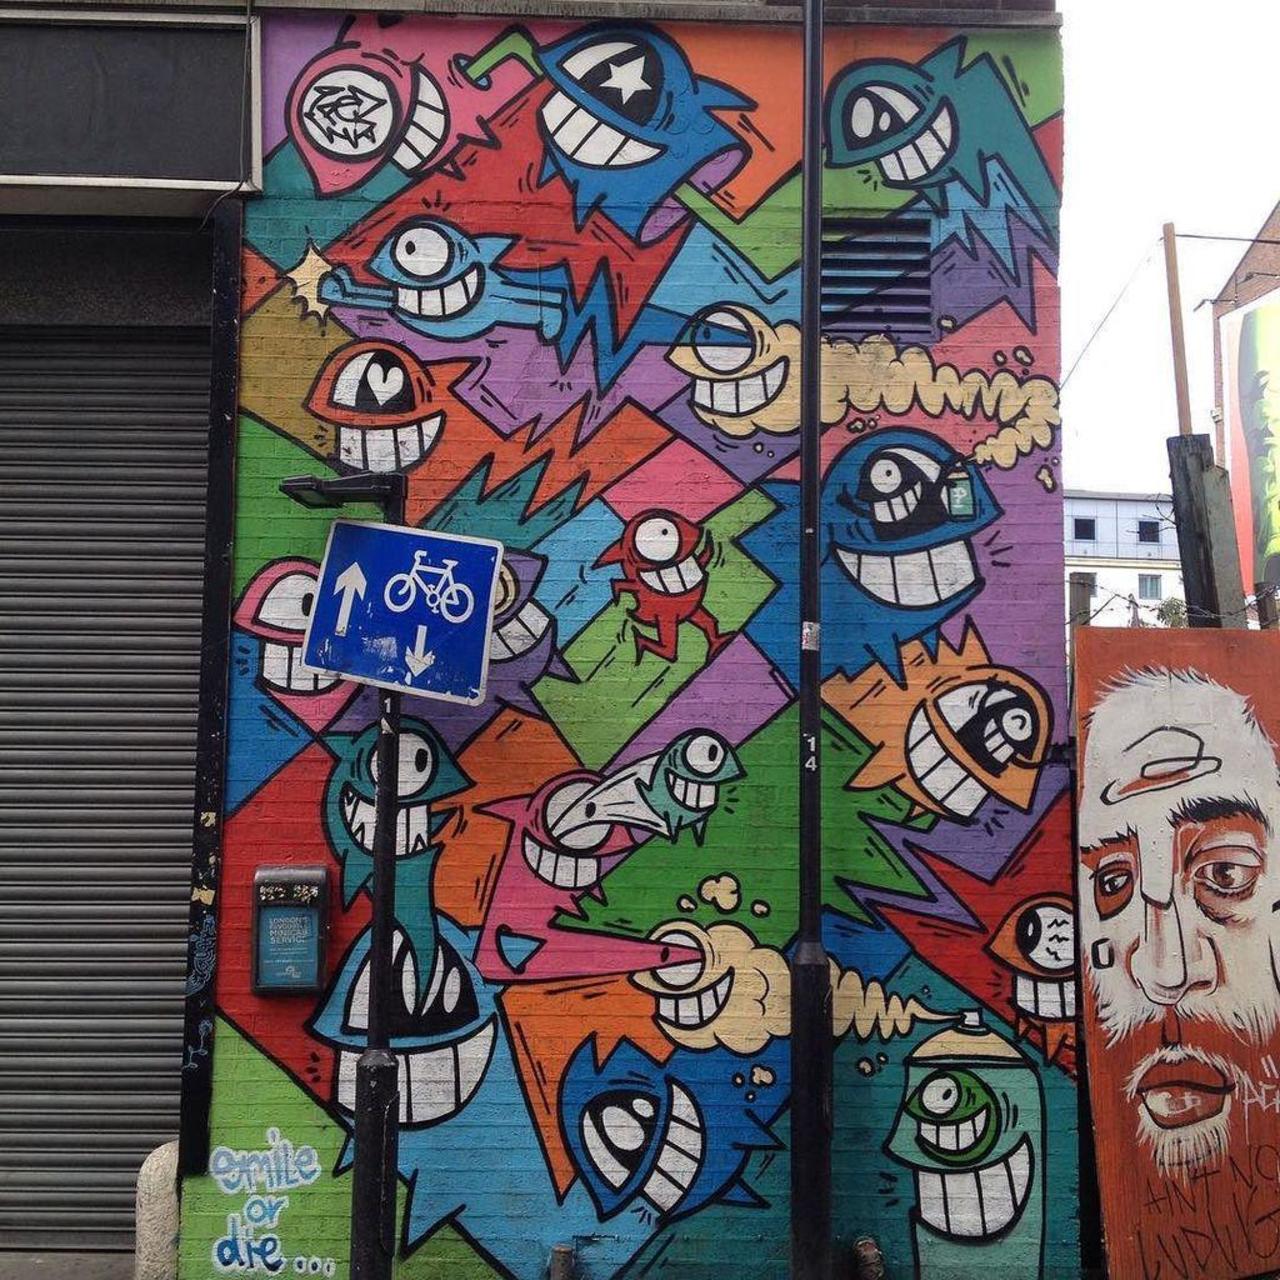 Eentje voor @wimplash #streetart #streetartlondon #graffiti #london #thisislondon @pezbarcelona by isadarko http://t.co/Vk0781IU1m